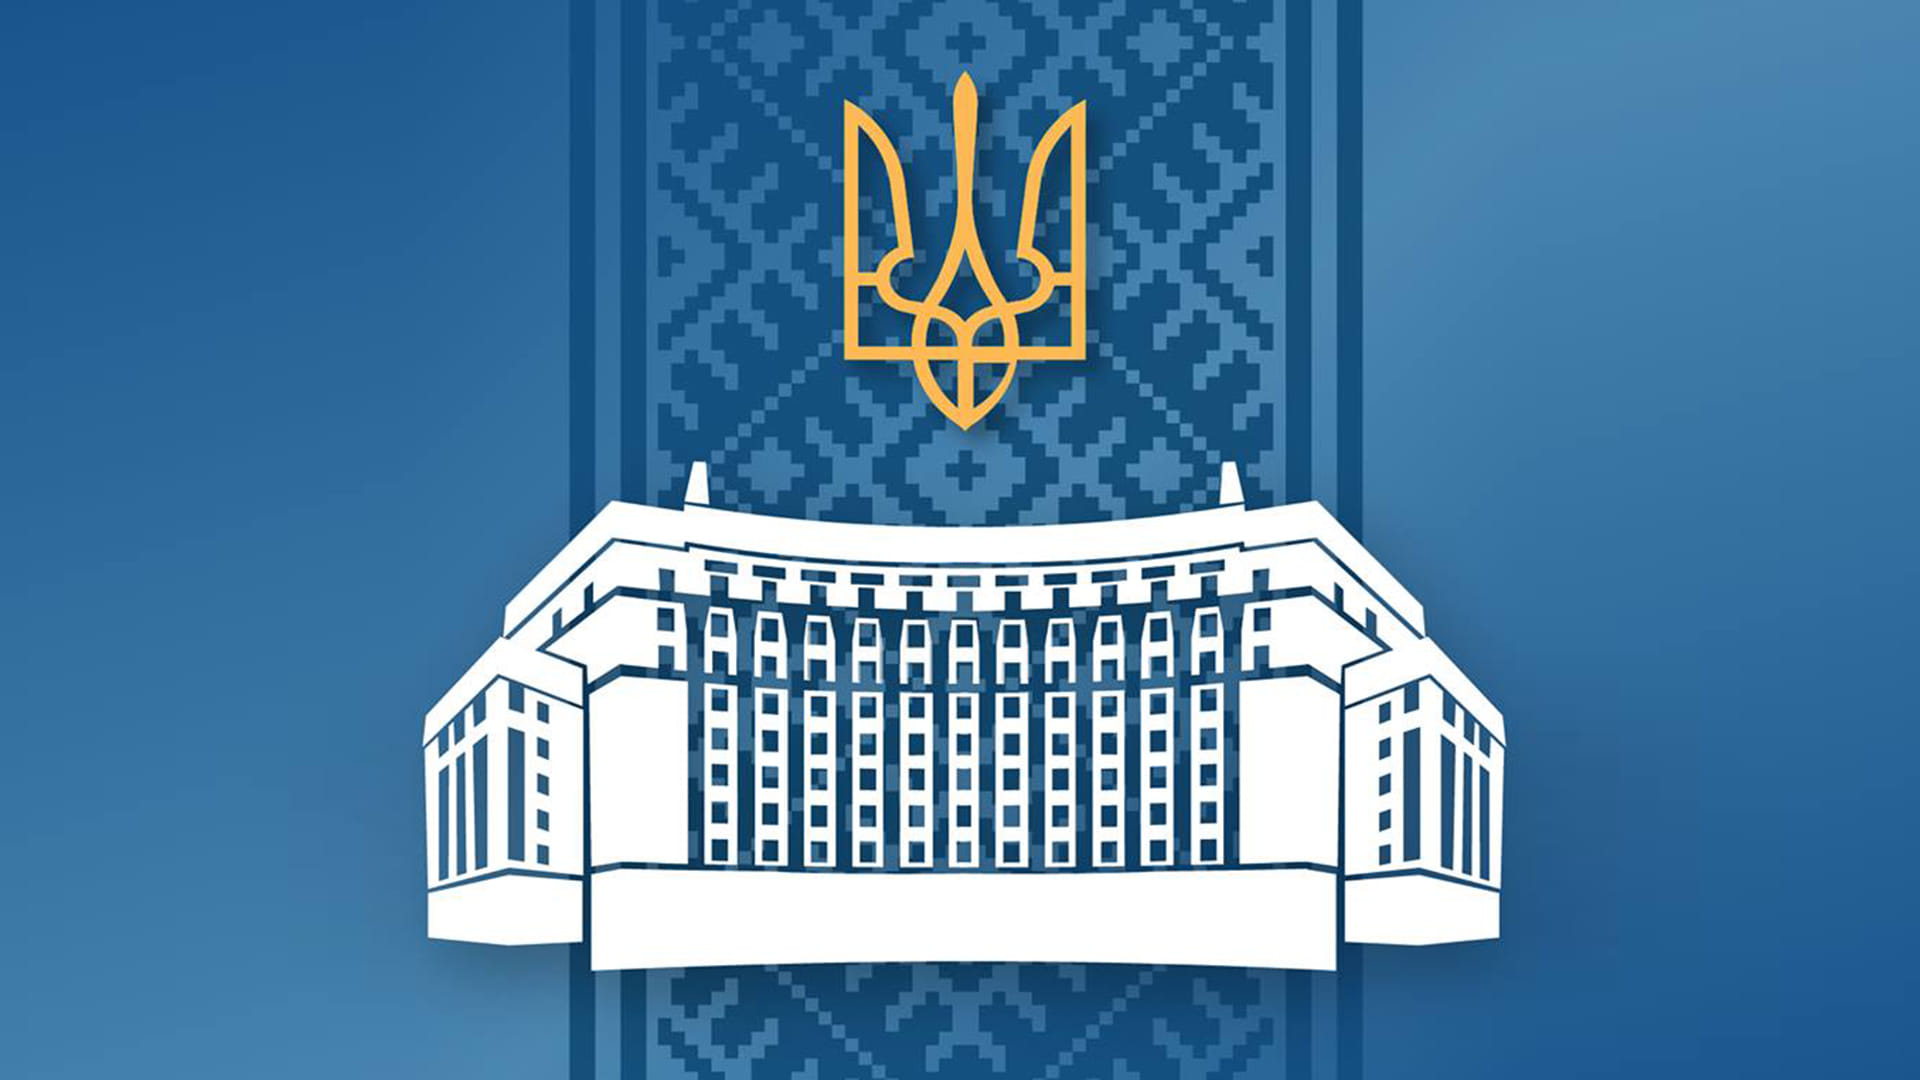 Український прапор зображений на прапорі України